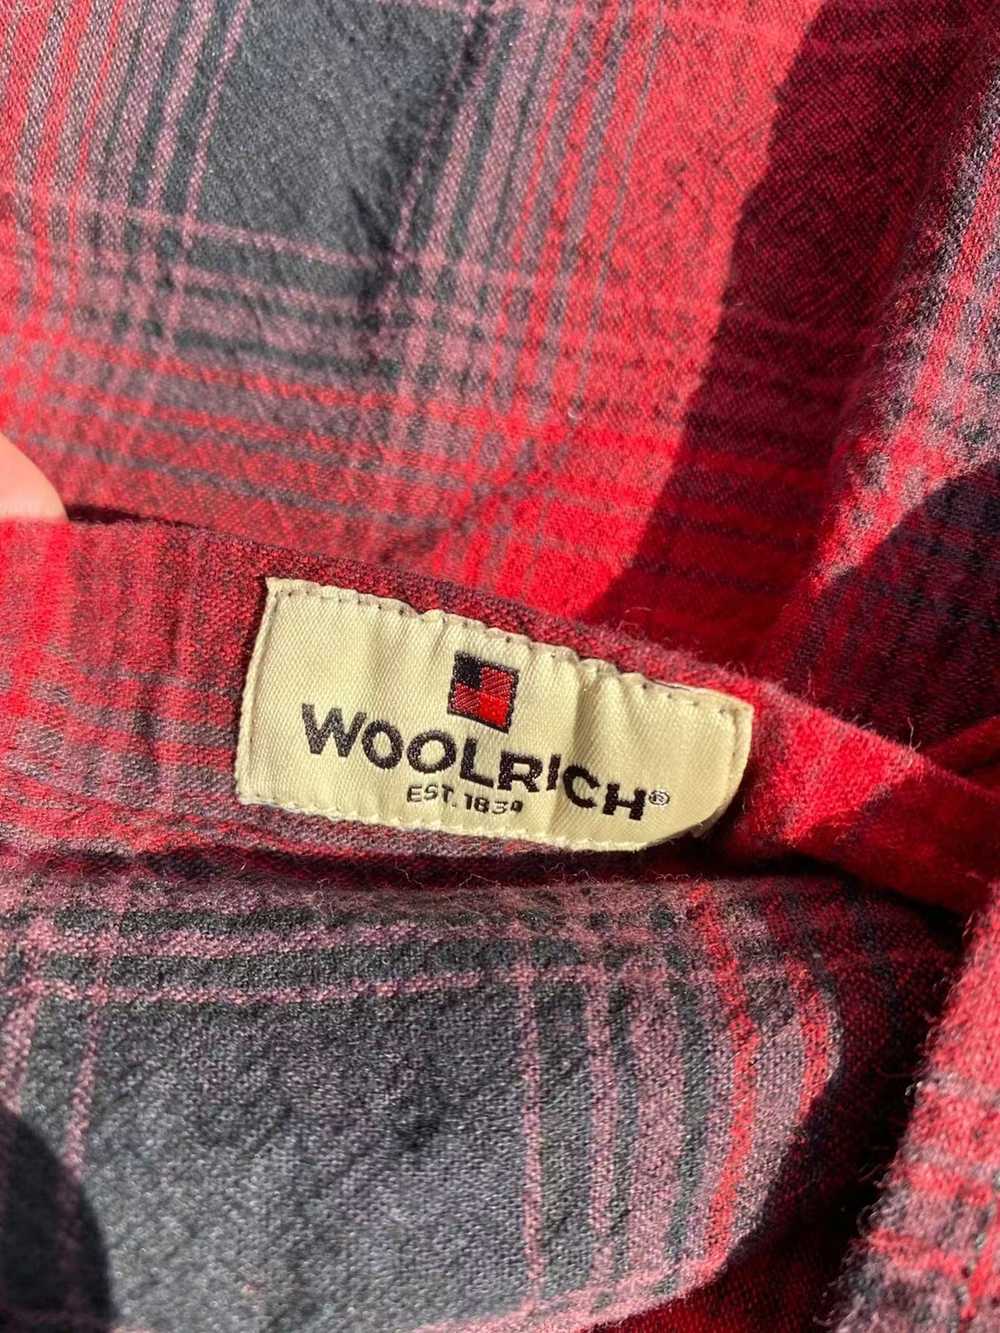 Woolrich Woolen Mills Vintage Flannel Red/Black - image 3